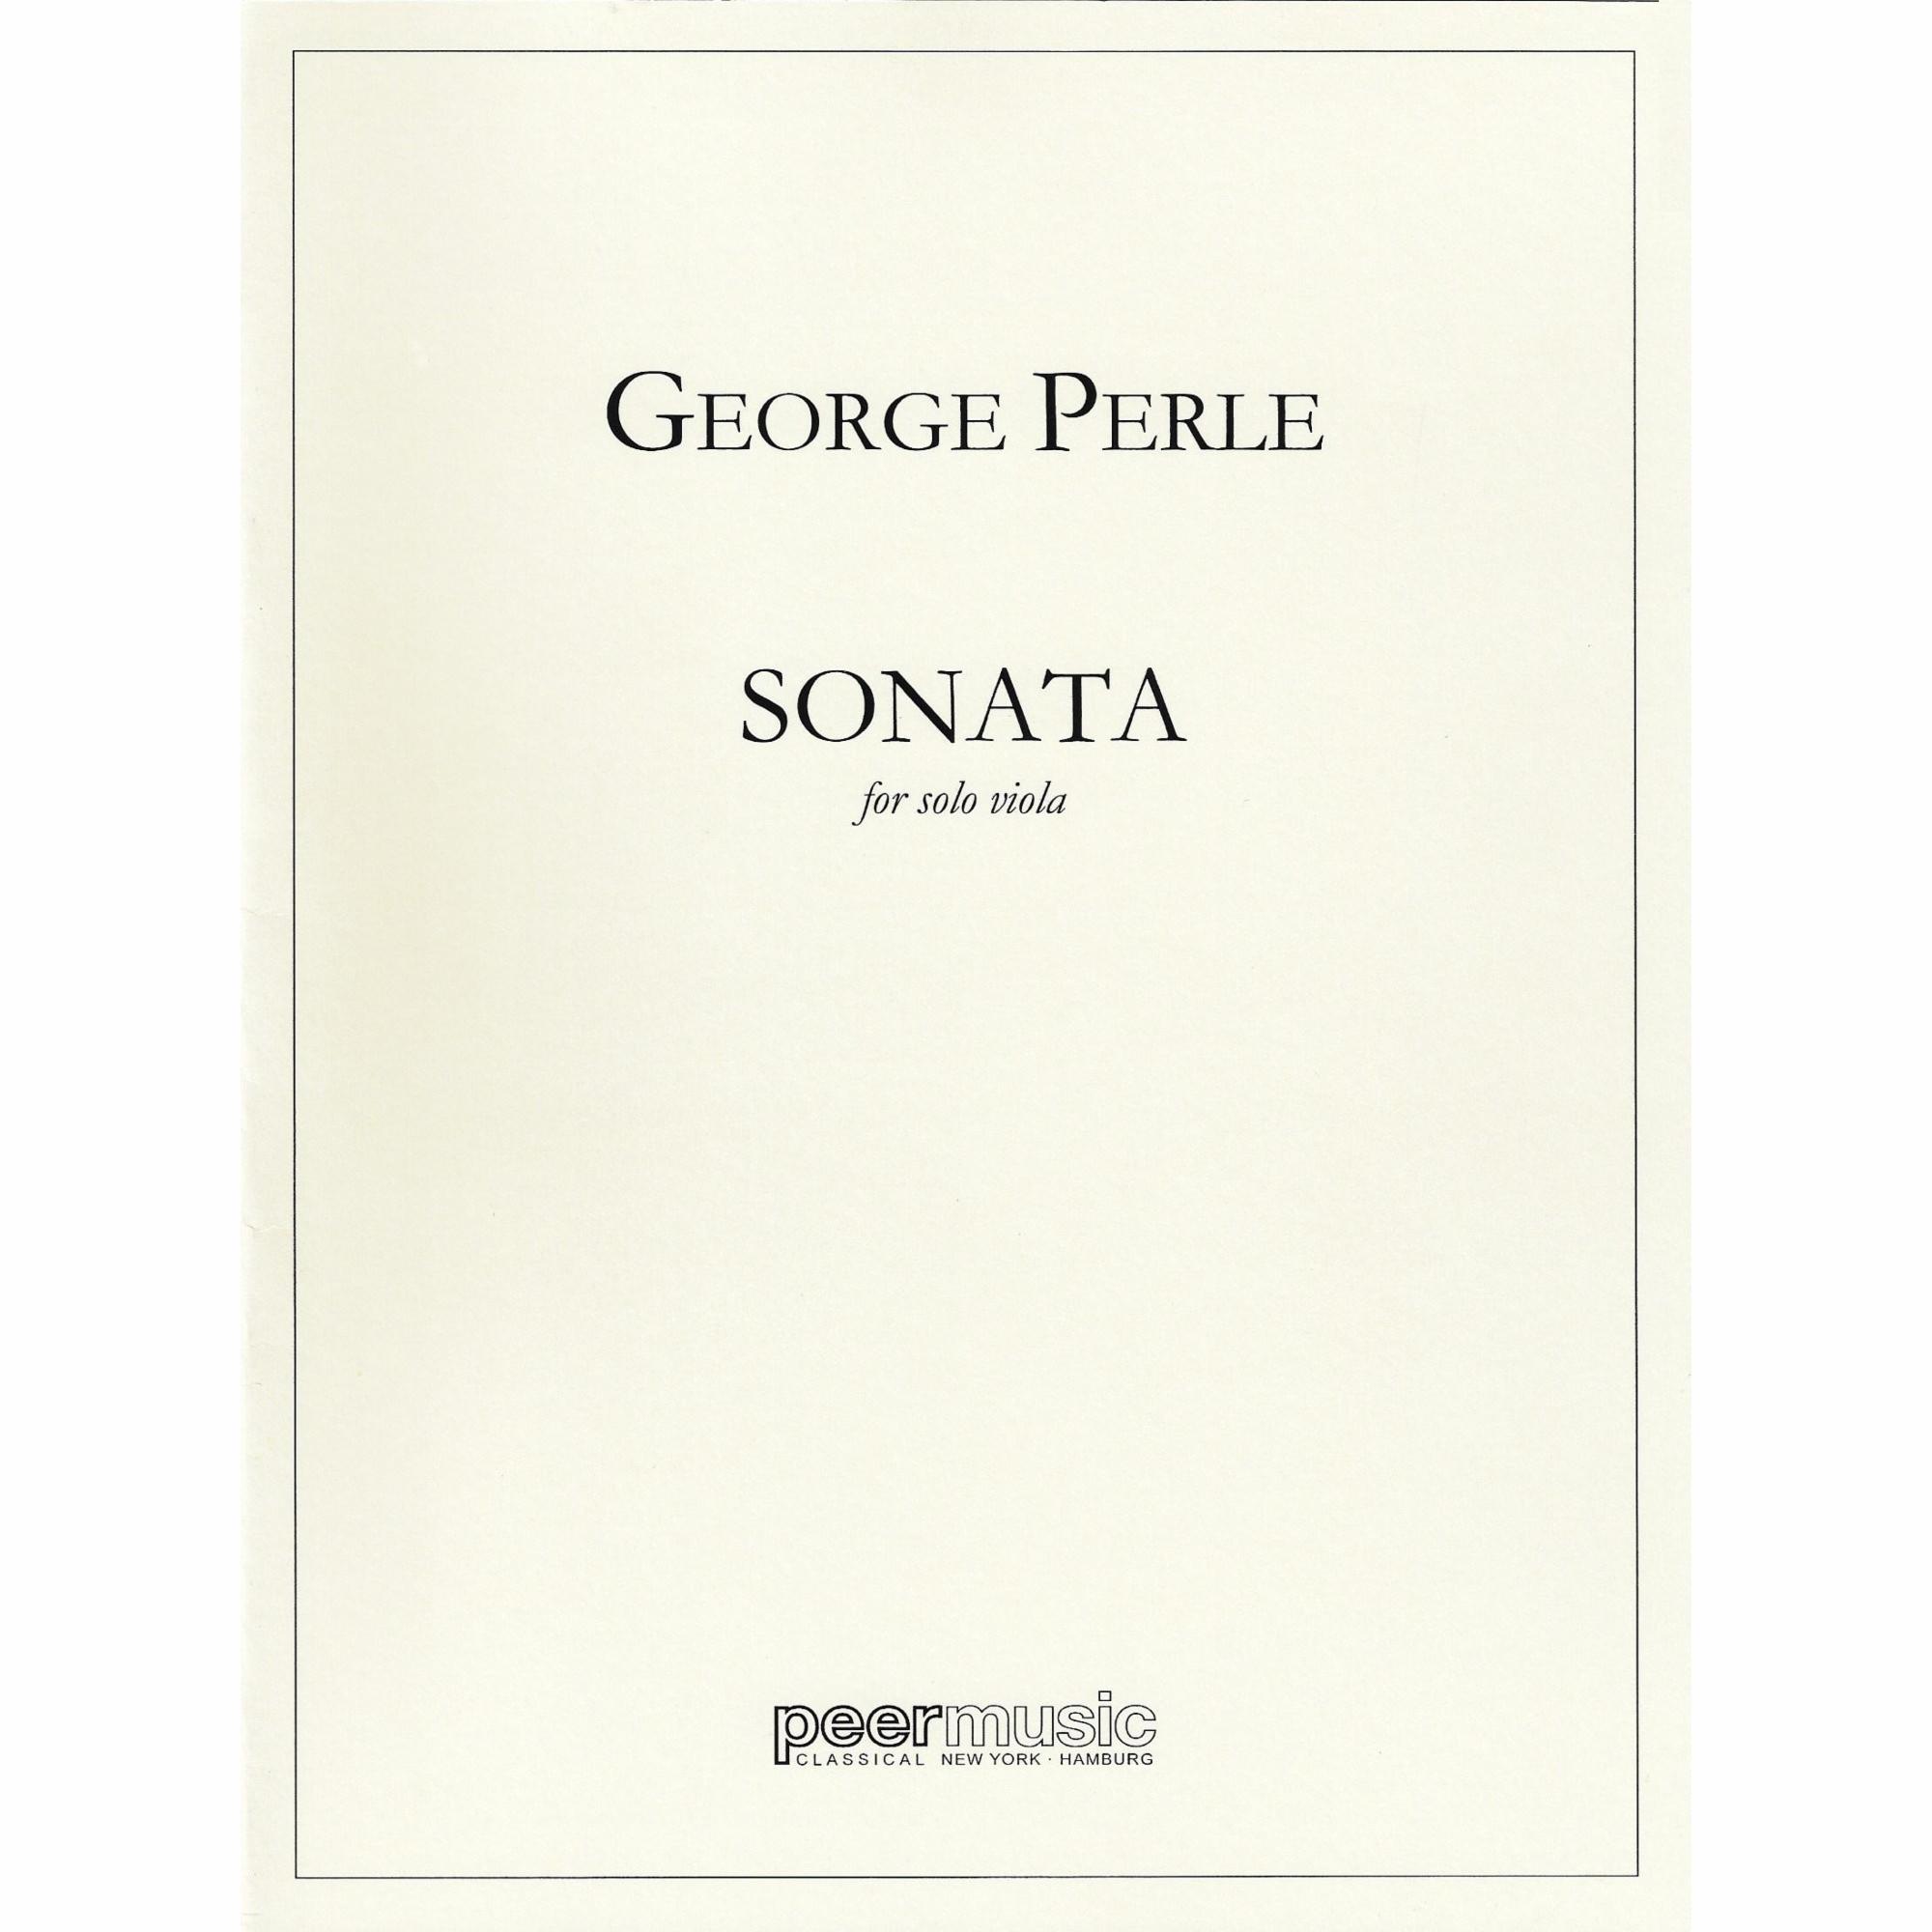 Perle -- Sonata, Op. 12 for Solo Viola